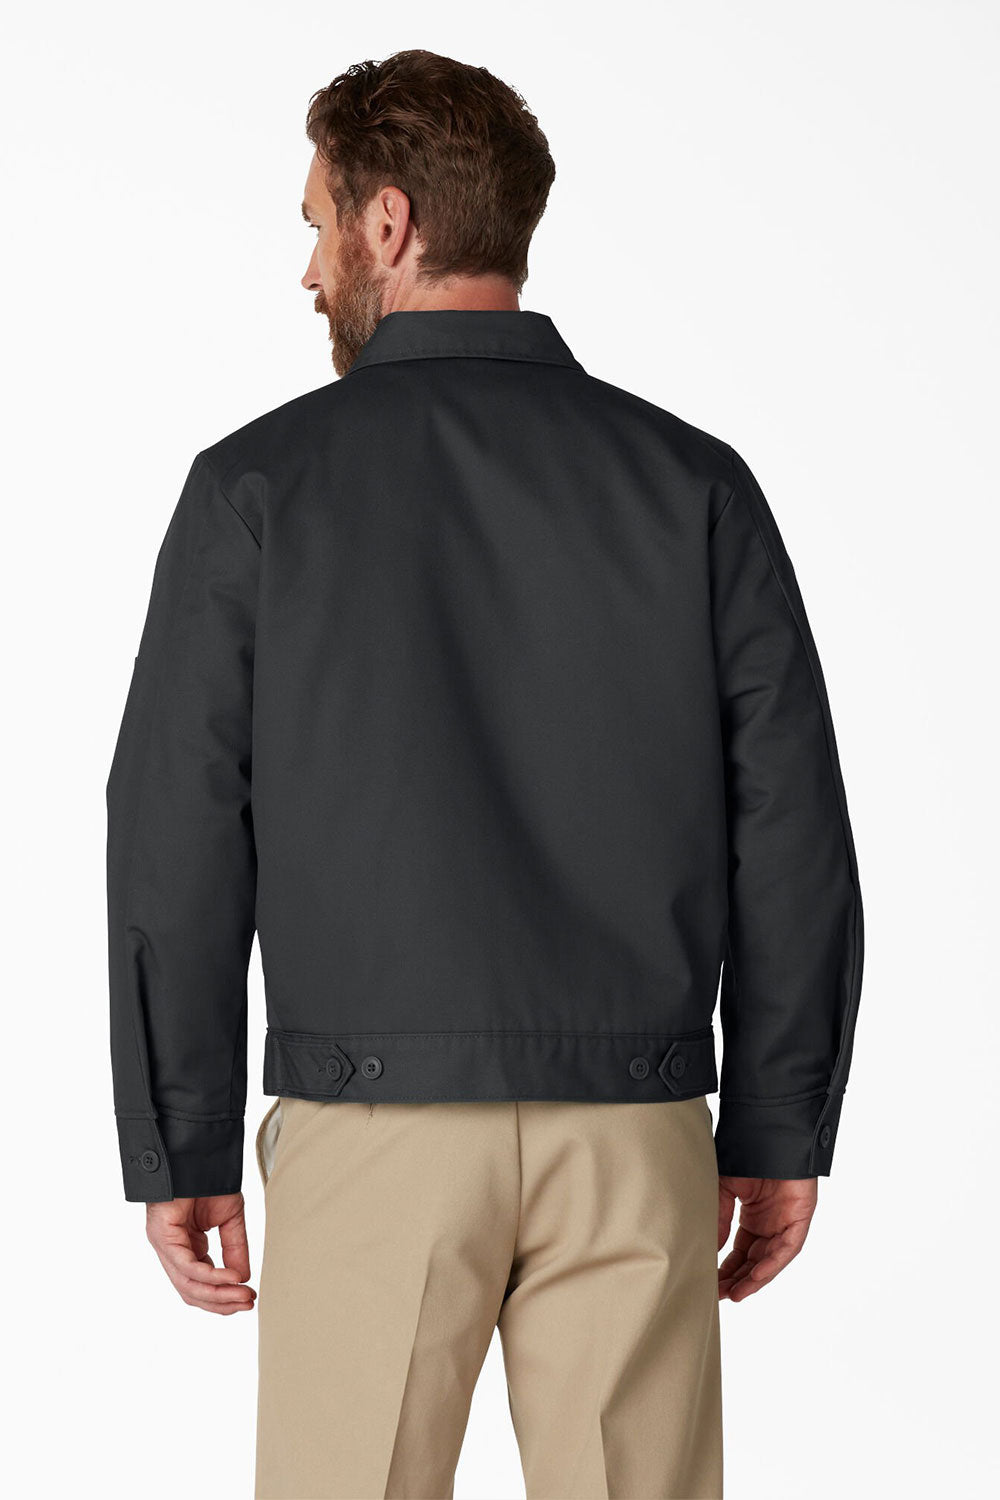 Shop Dickies Clothing | Dickies Insulated Eisenhower Jacket